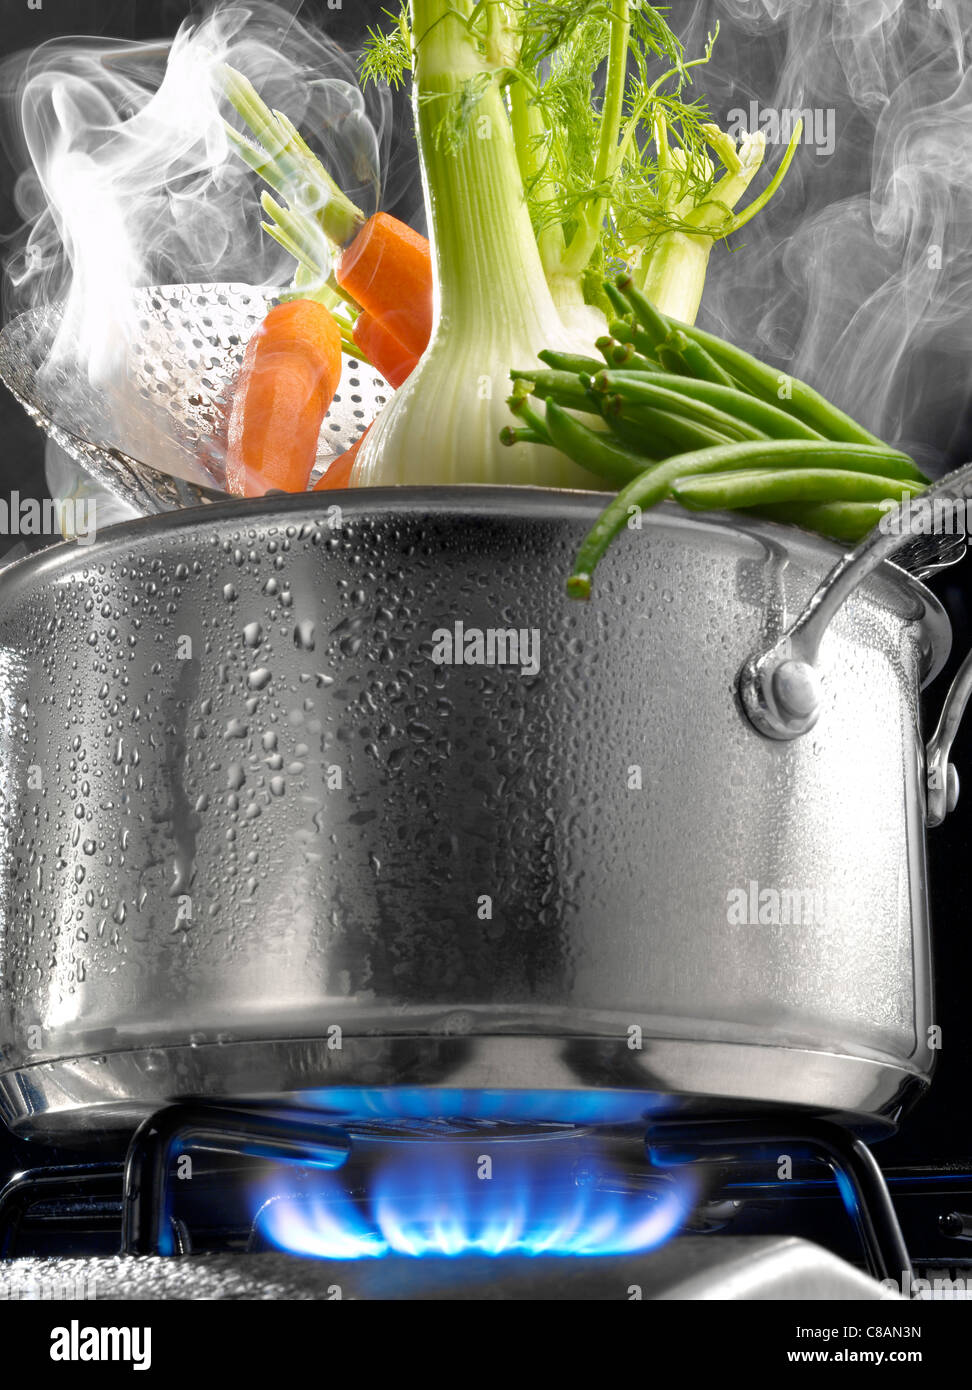 https://c8.alamy.com/comp/C8AN3N/steam-cooking-vegetables-in-a-saucepan-on-a-gas-cooker-C8AN3N.jpg